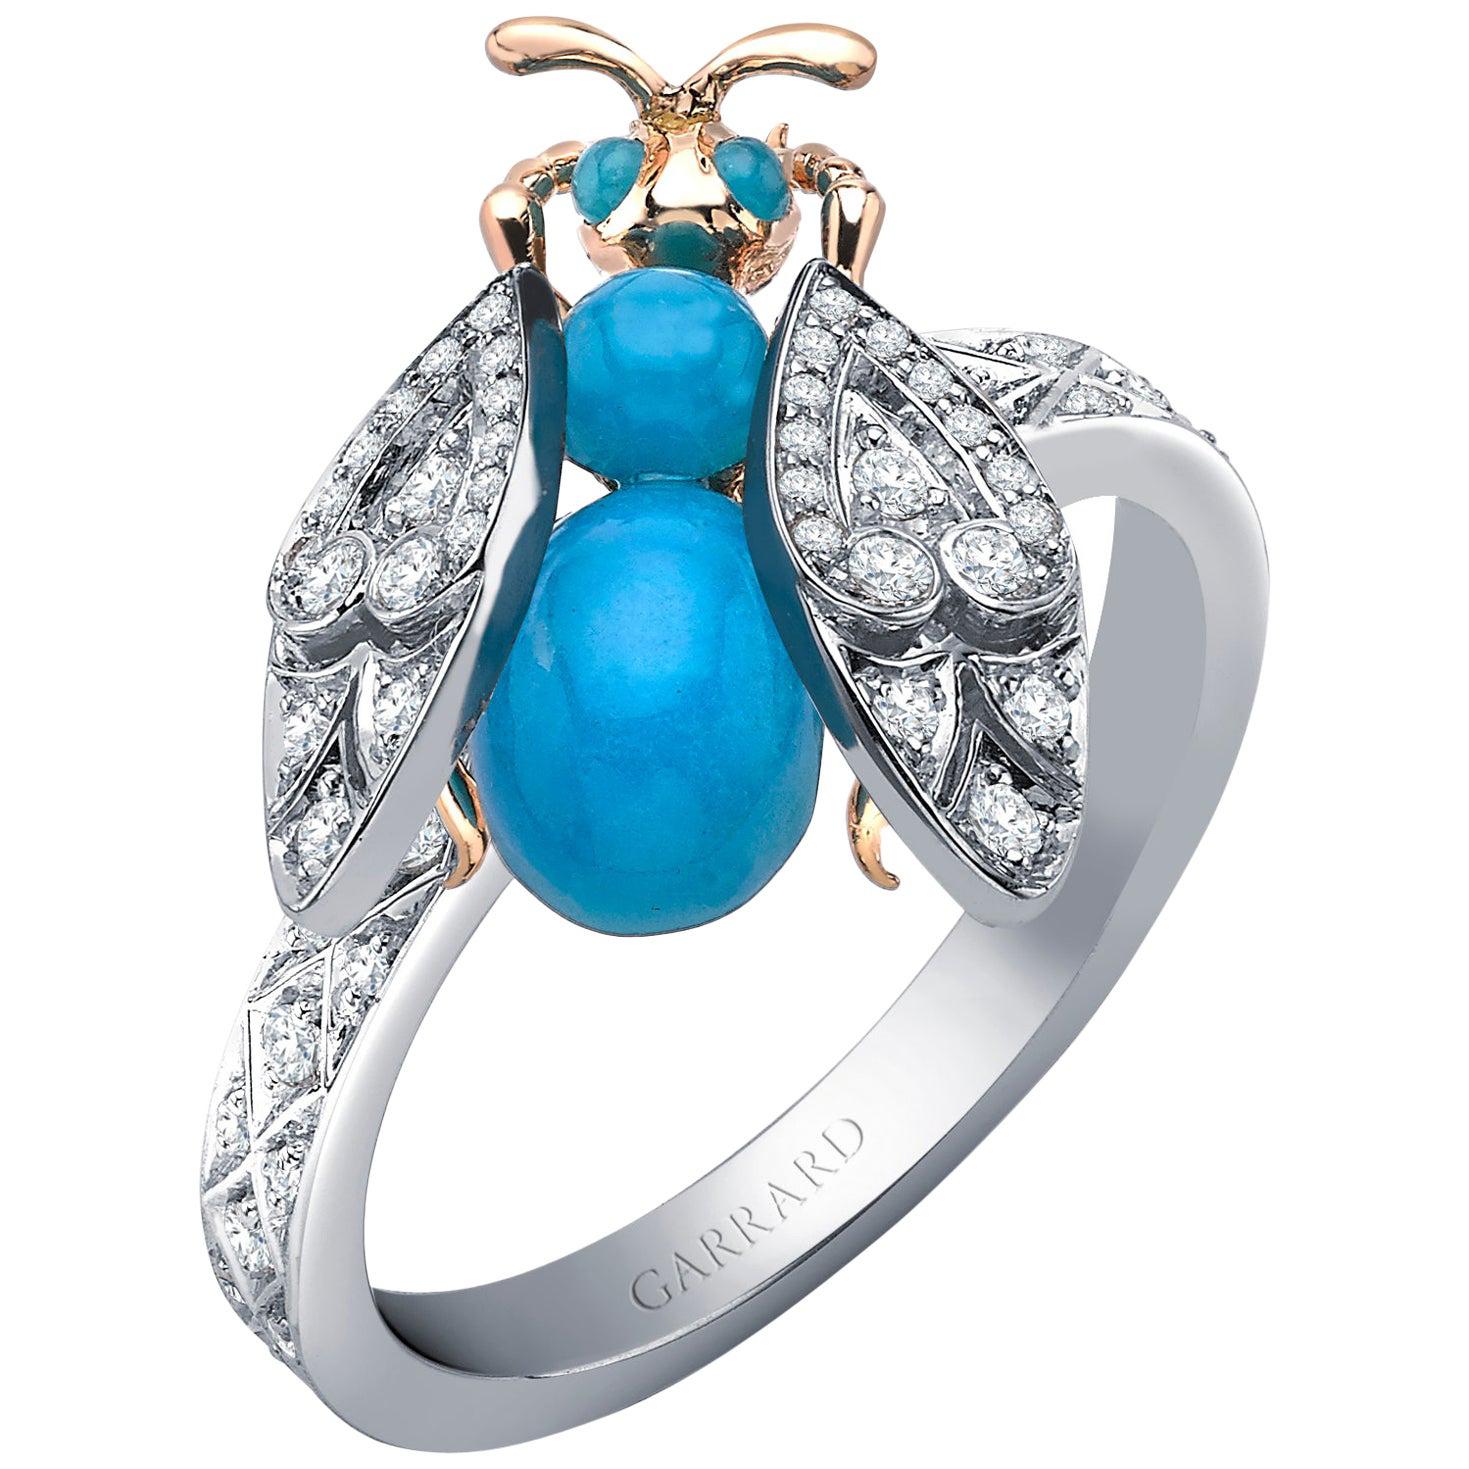 Garrard 'Enchanted Palace' 18 Karat Gold Diamond and Turquoise Cabachon Ring For Sale